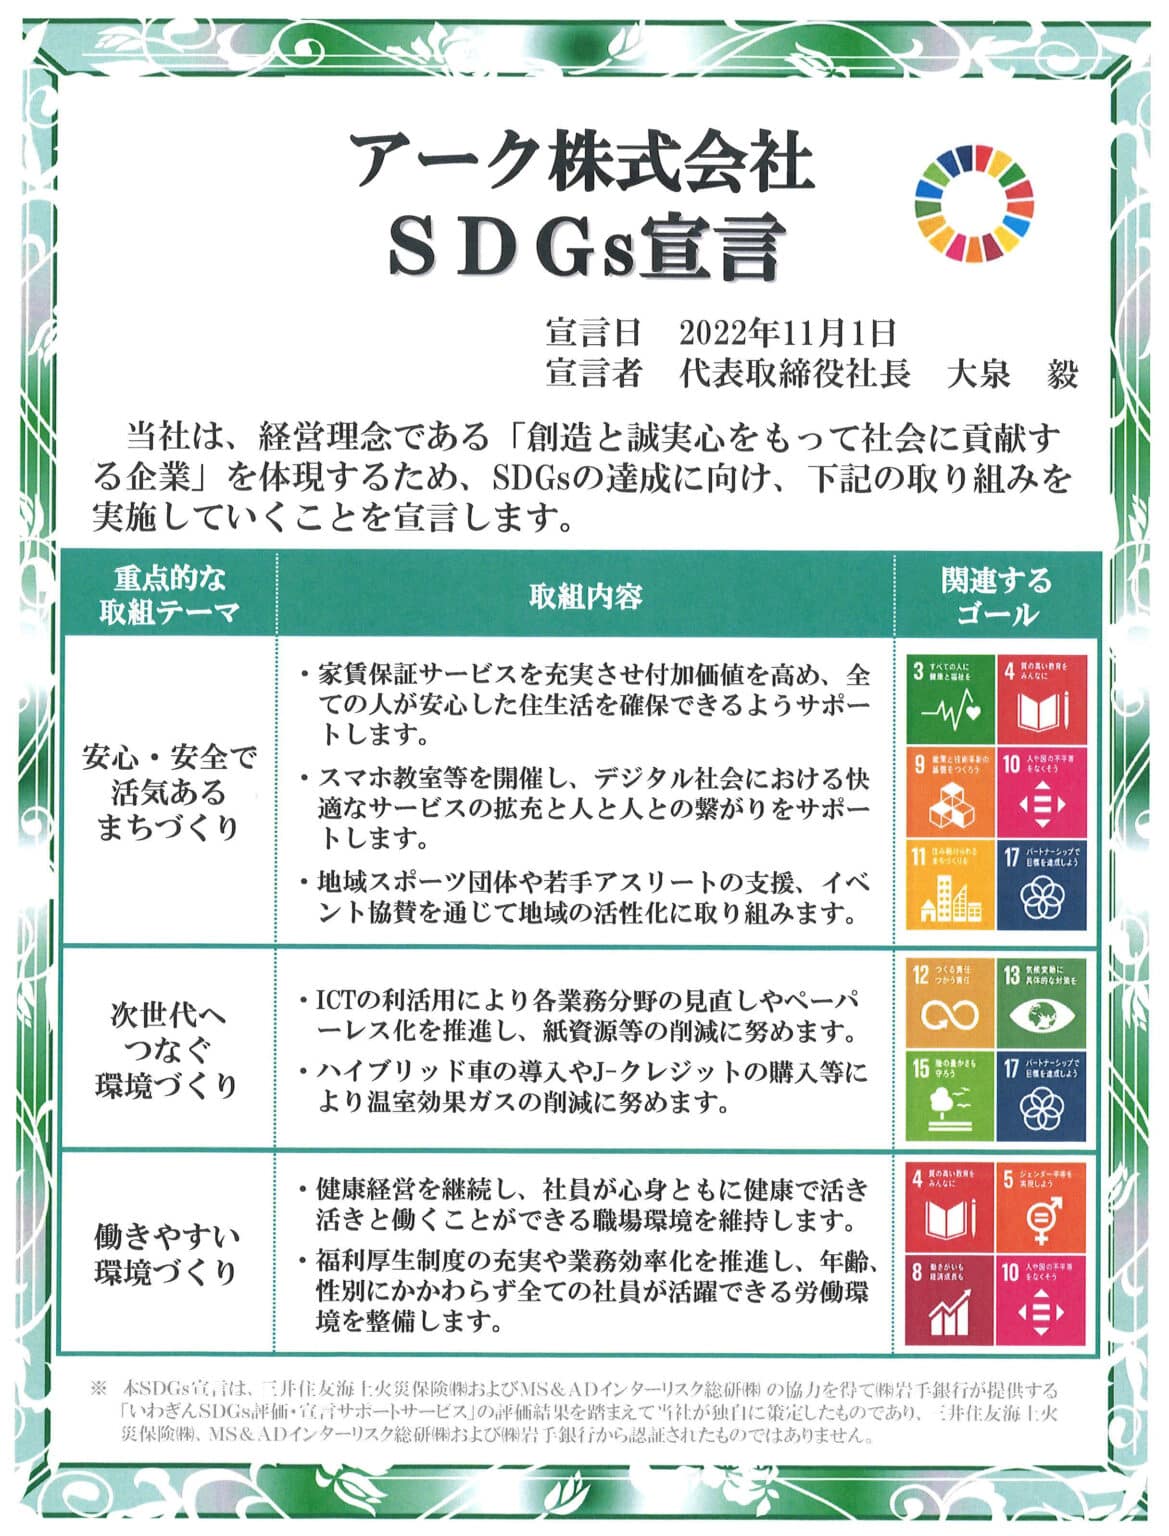 アーク株式会社SDGs宣言